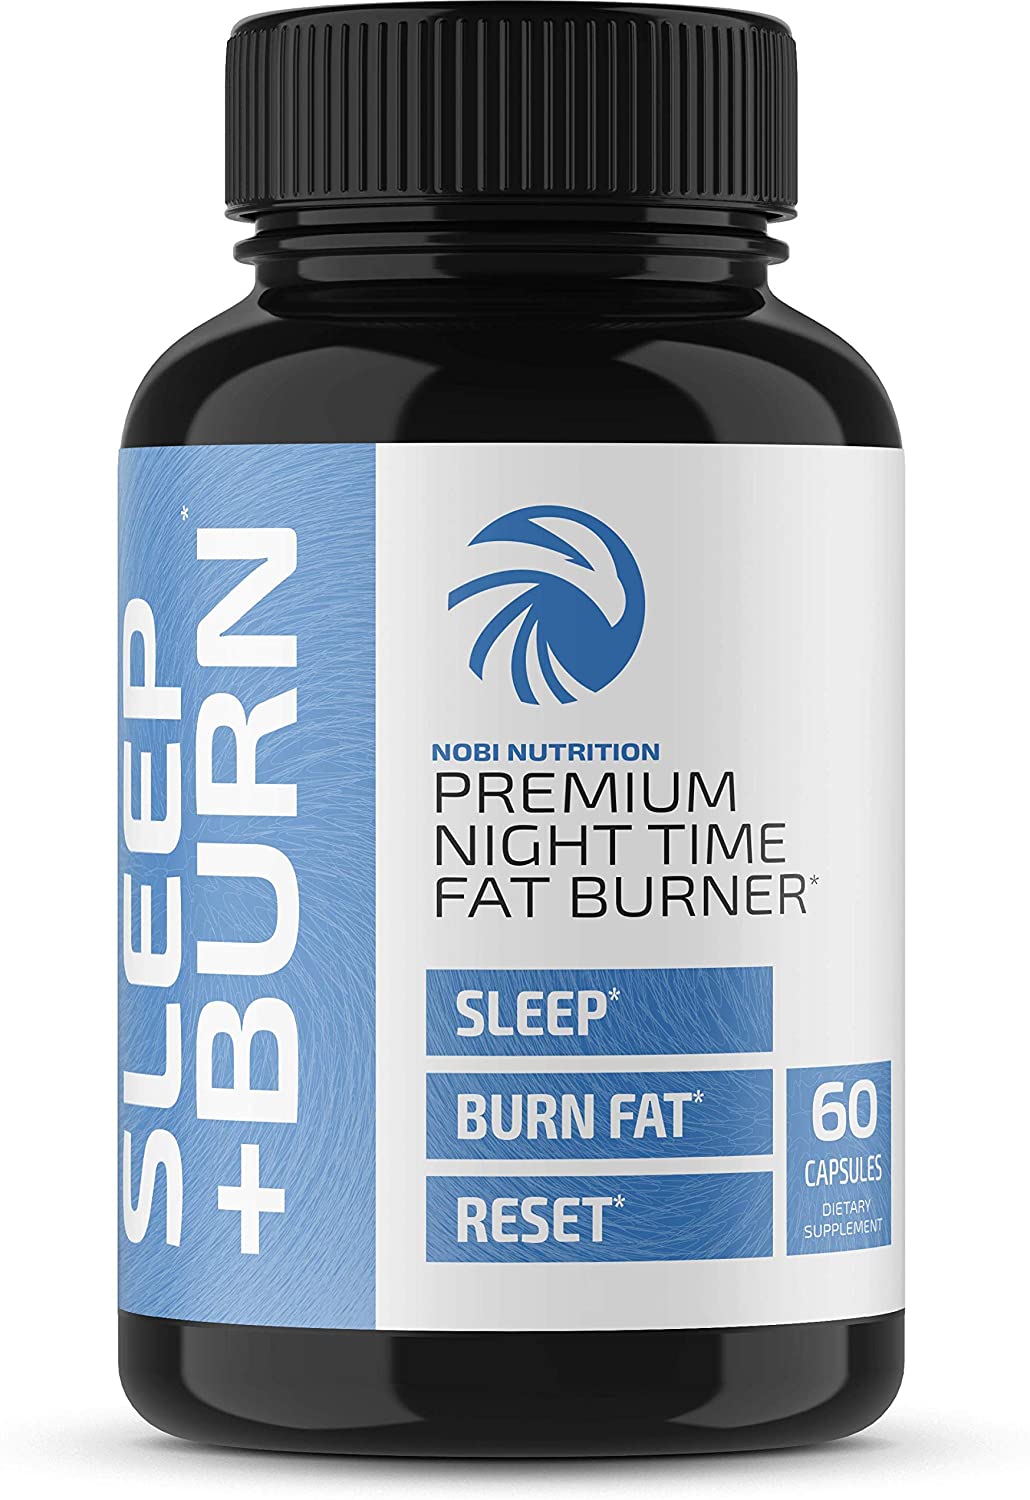 Nobi Nutrition Premium Night Time Fat Burner